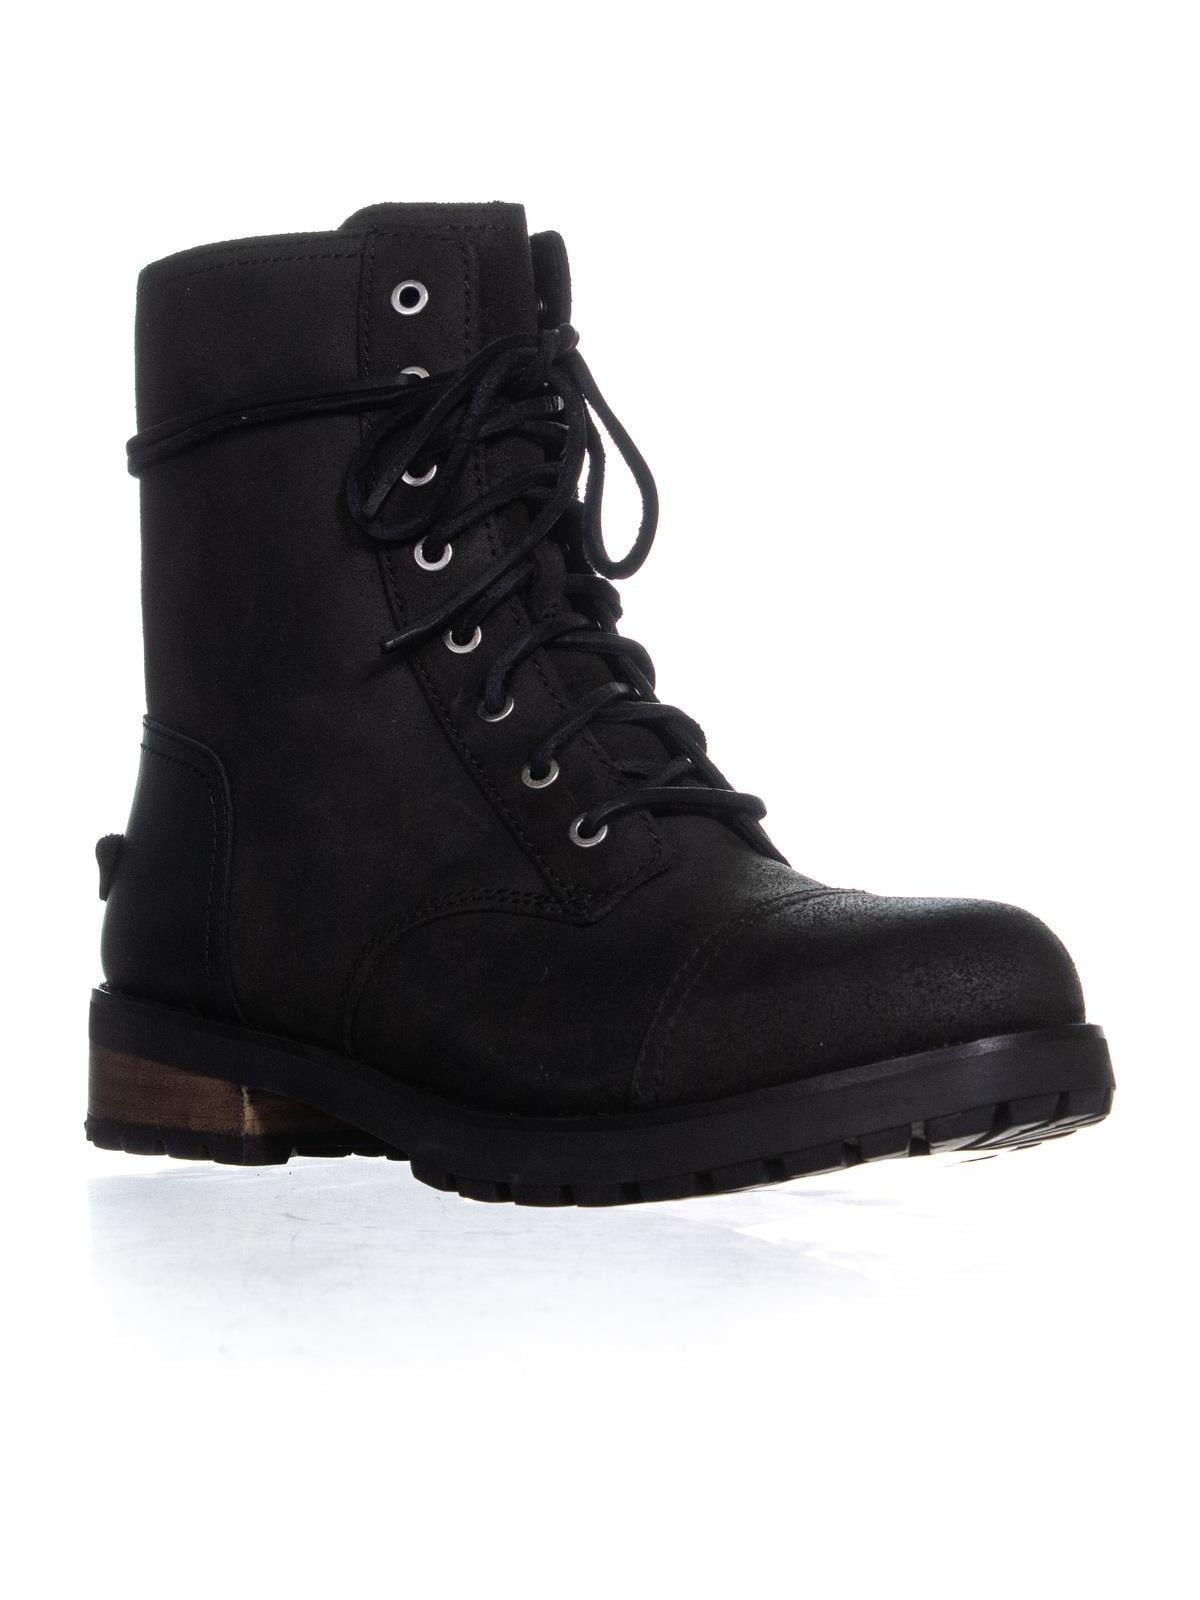 ugg black combat boots